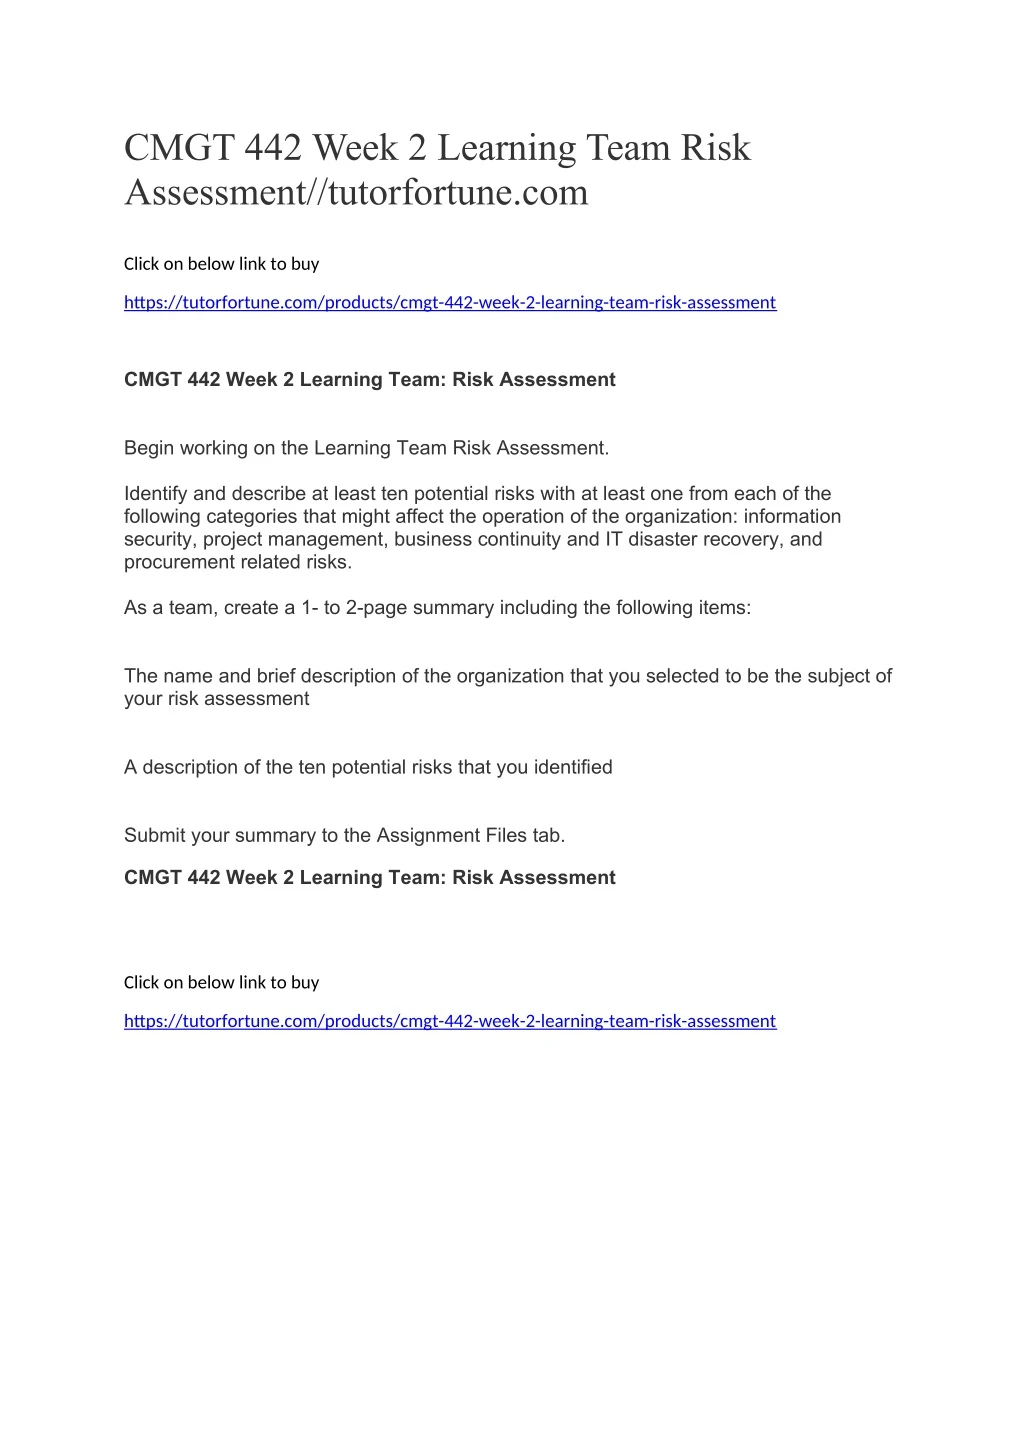 cmgt 442 week 2 learning team risk assessment